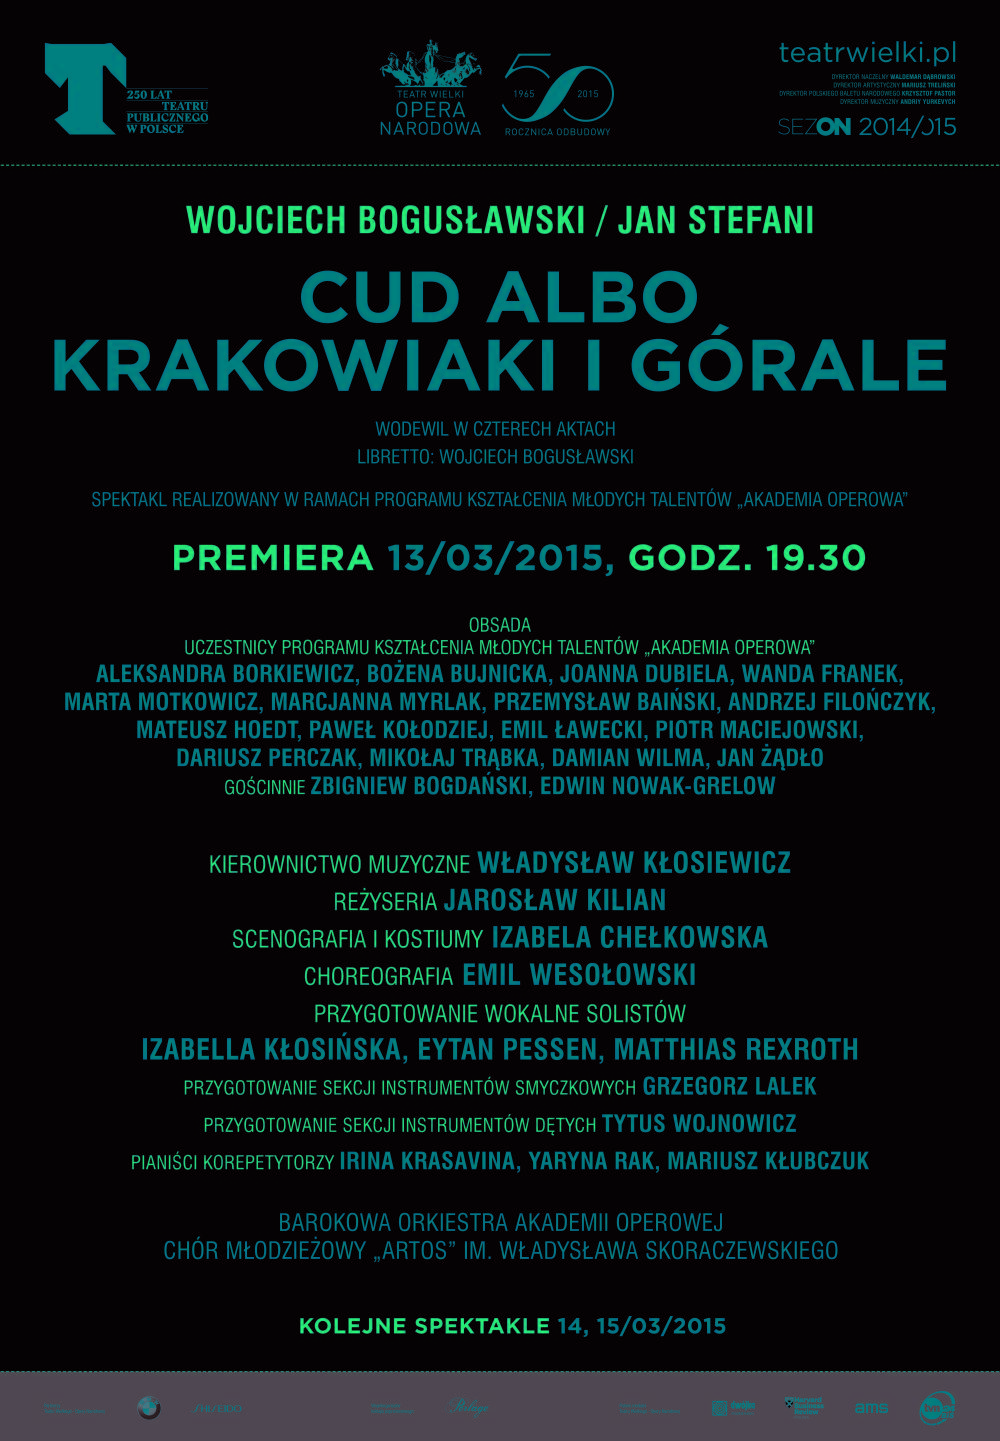 Afisz „Cud albo Krakowiaki i Górale” Wojciech Bogusławski / Jan Stefani, premiera  2015-03-13